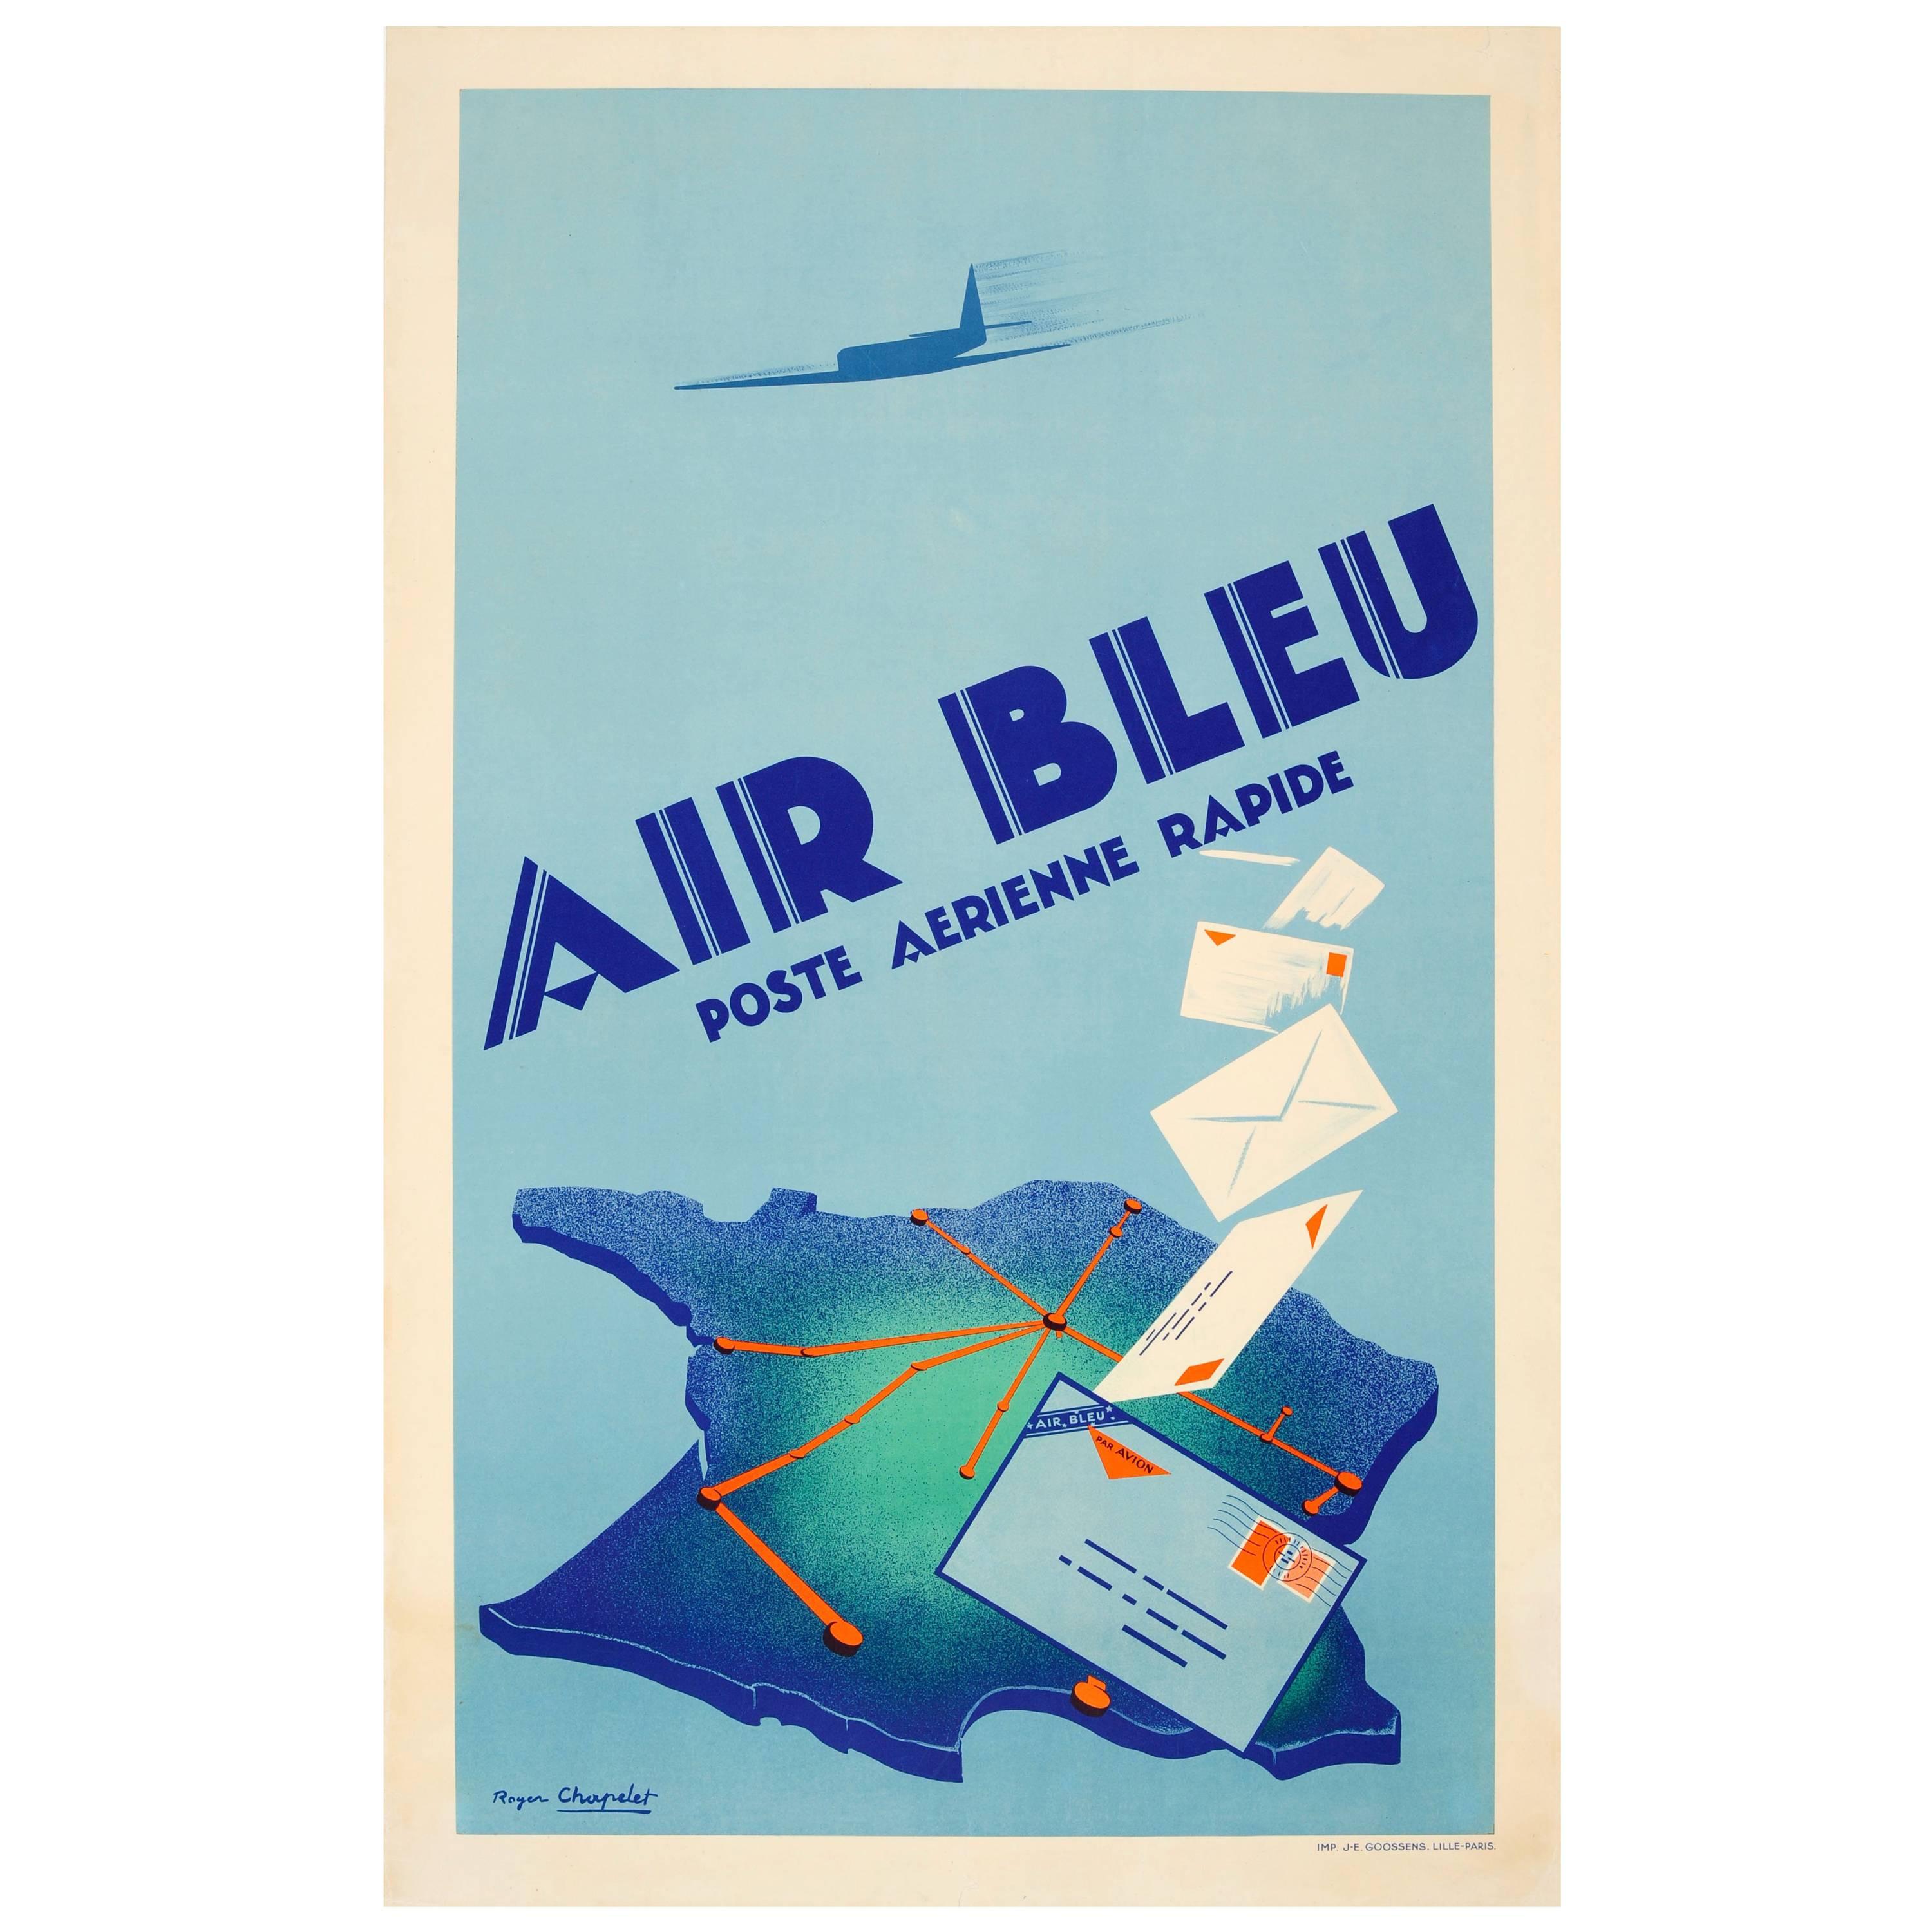 Original Vintage Art Deco Poster for Air Bleu Poste Aerienne Rapide Air Mail For Sale